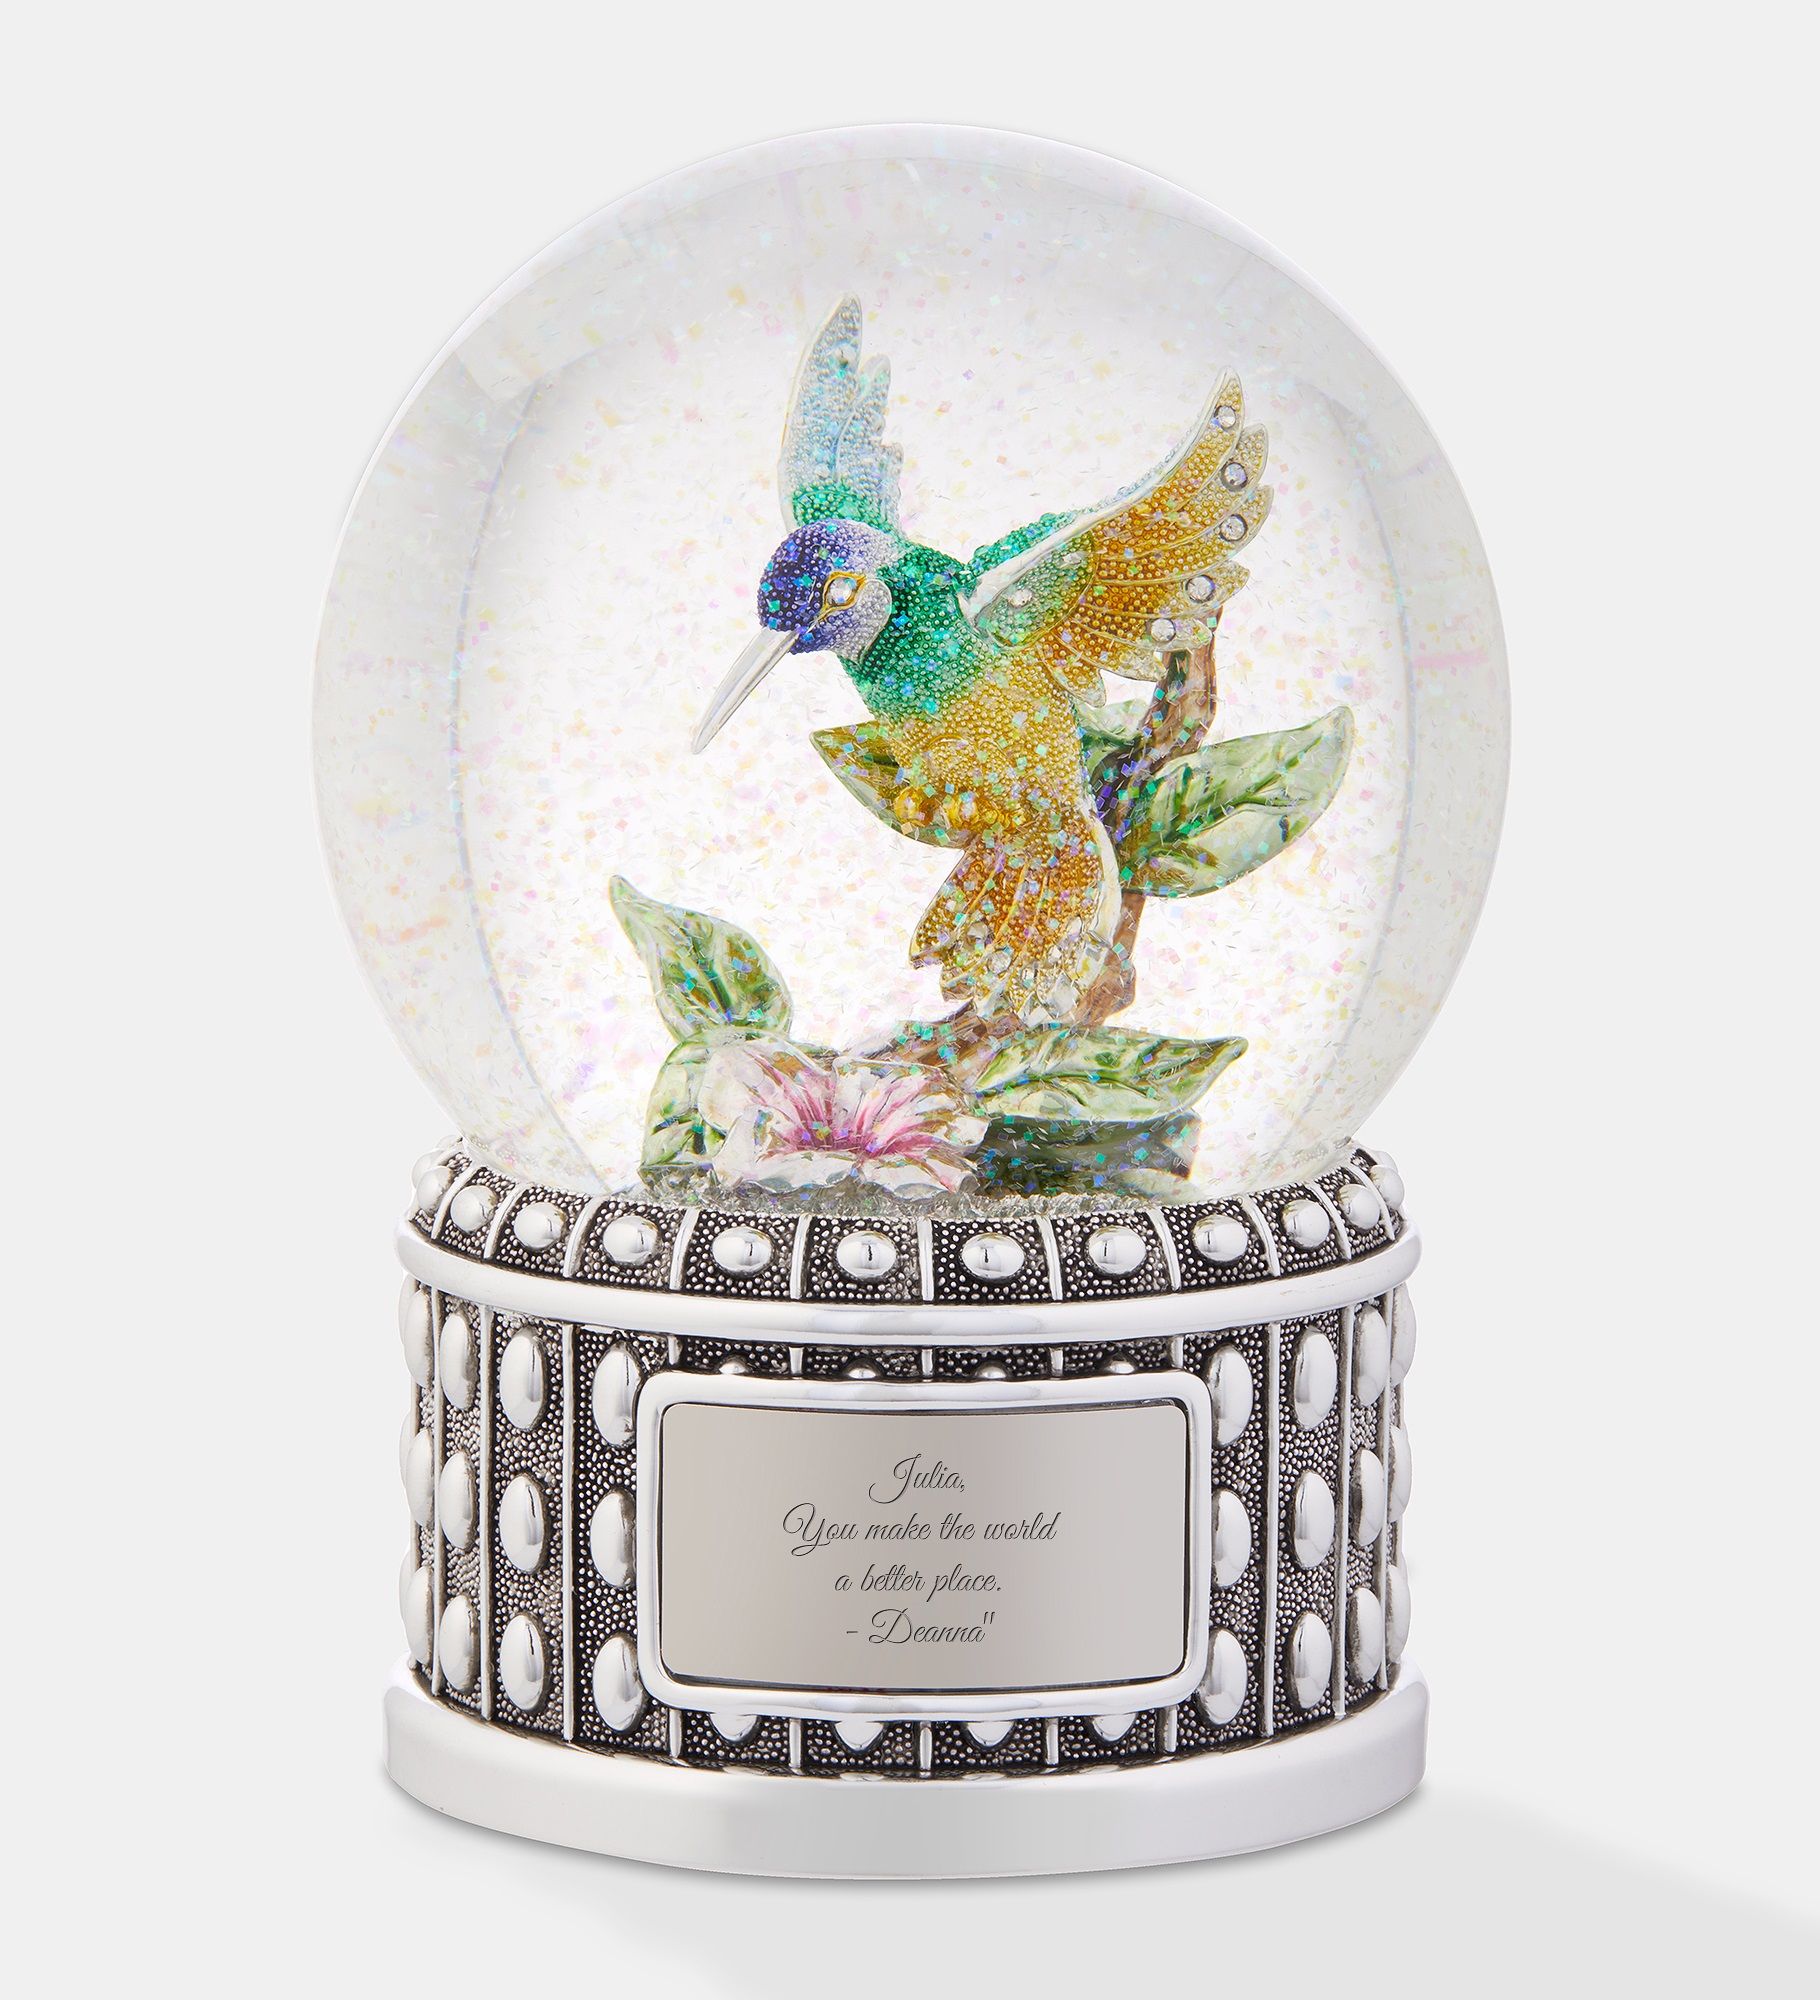  Engraved Jeweled Hummingbird Snow Globe